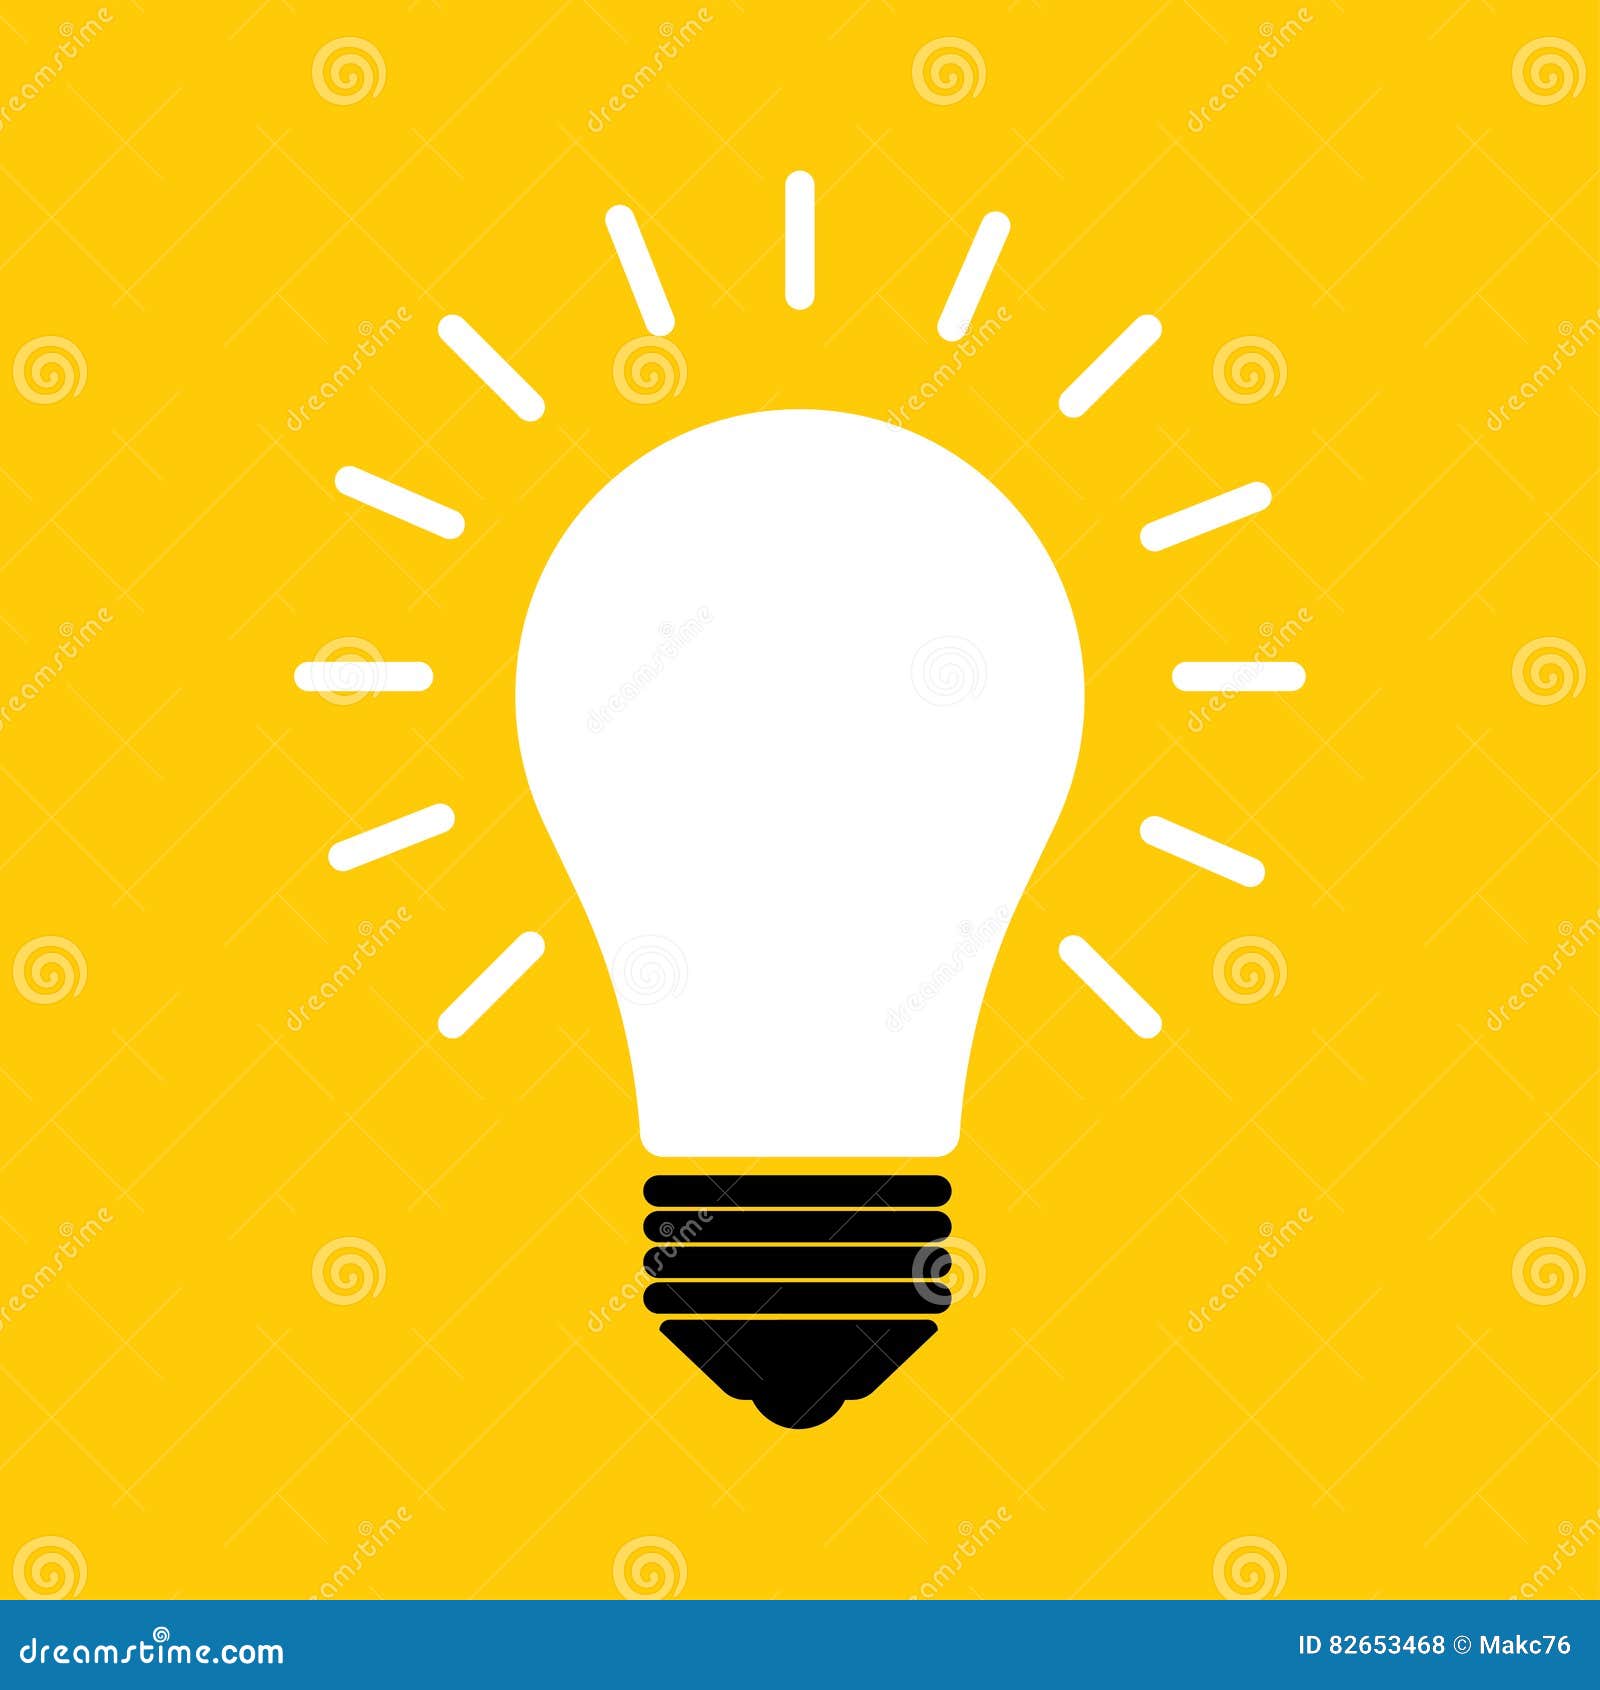 Simple Light Bulb Icon. Illustration Stock Vector - Illustration of icon, 82653468